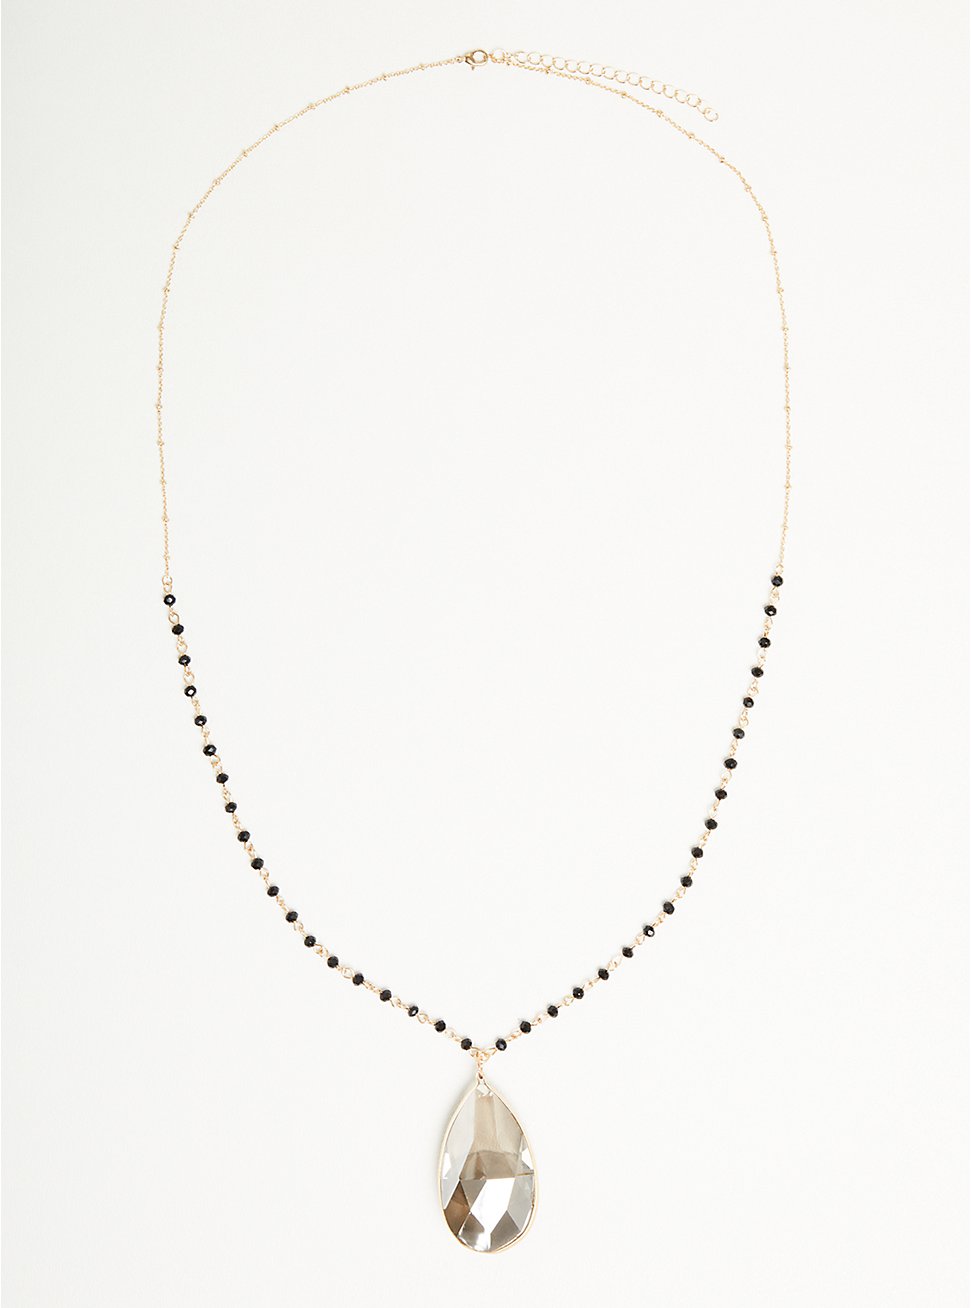 Plus Size Beaded Chain Teardrop Pendant Necklace - Gold Tone & Black Stone, , hi-res